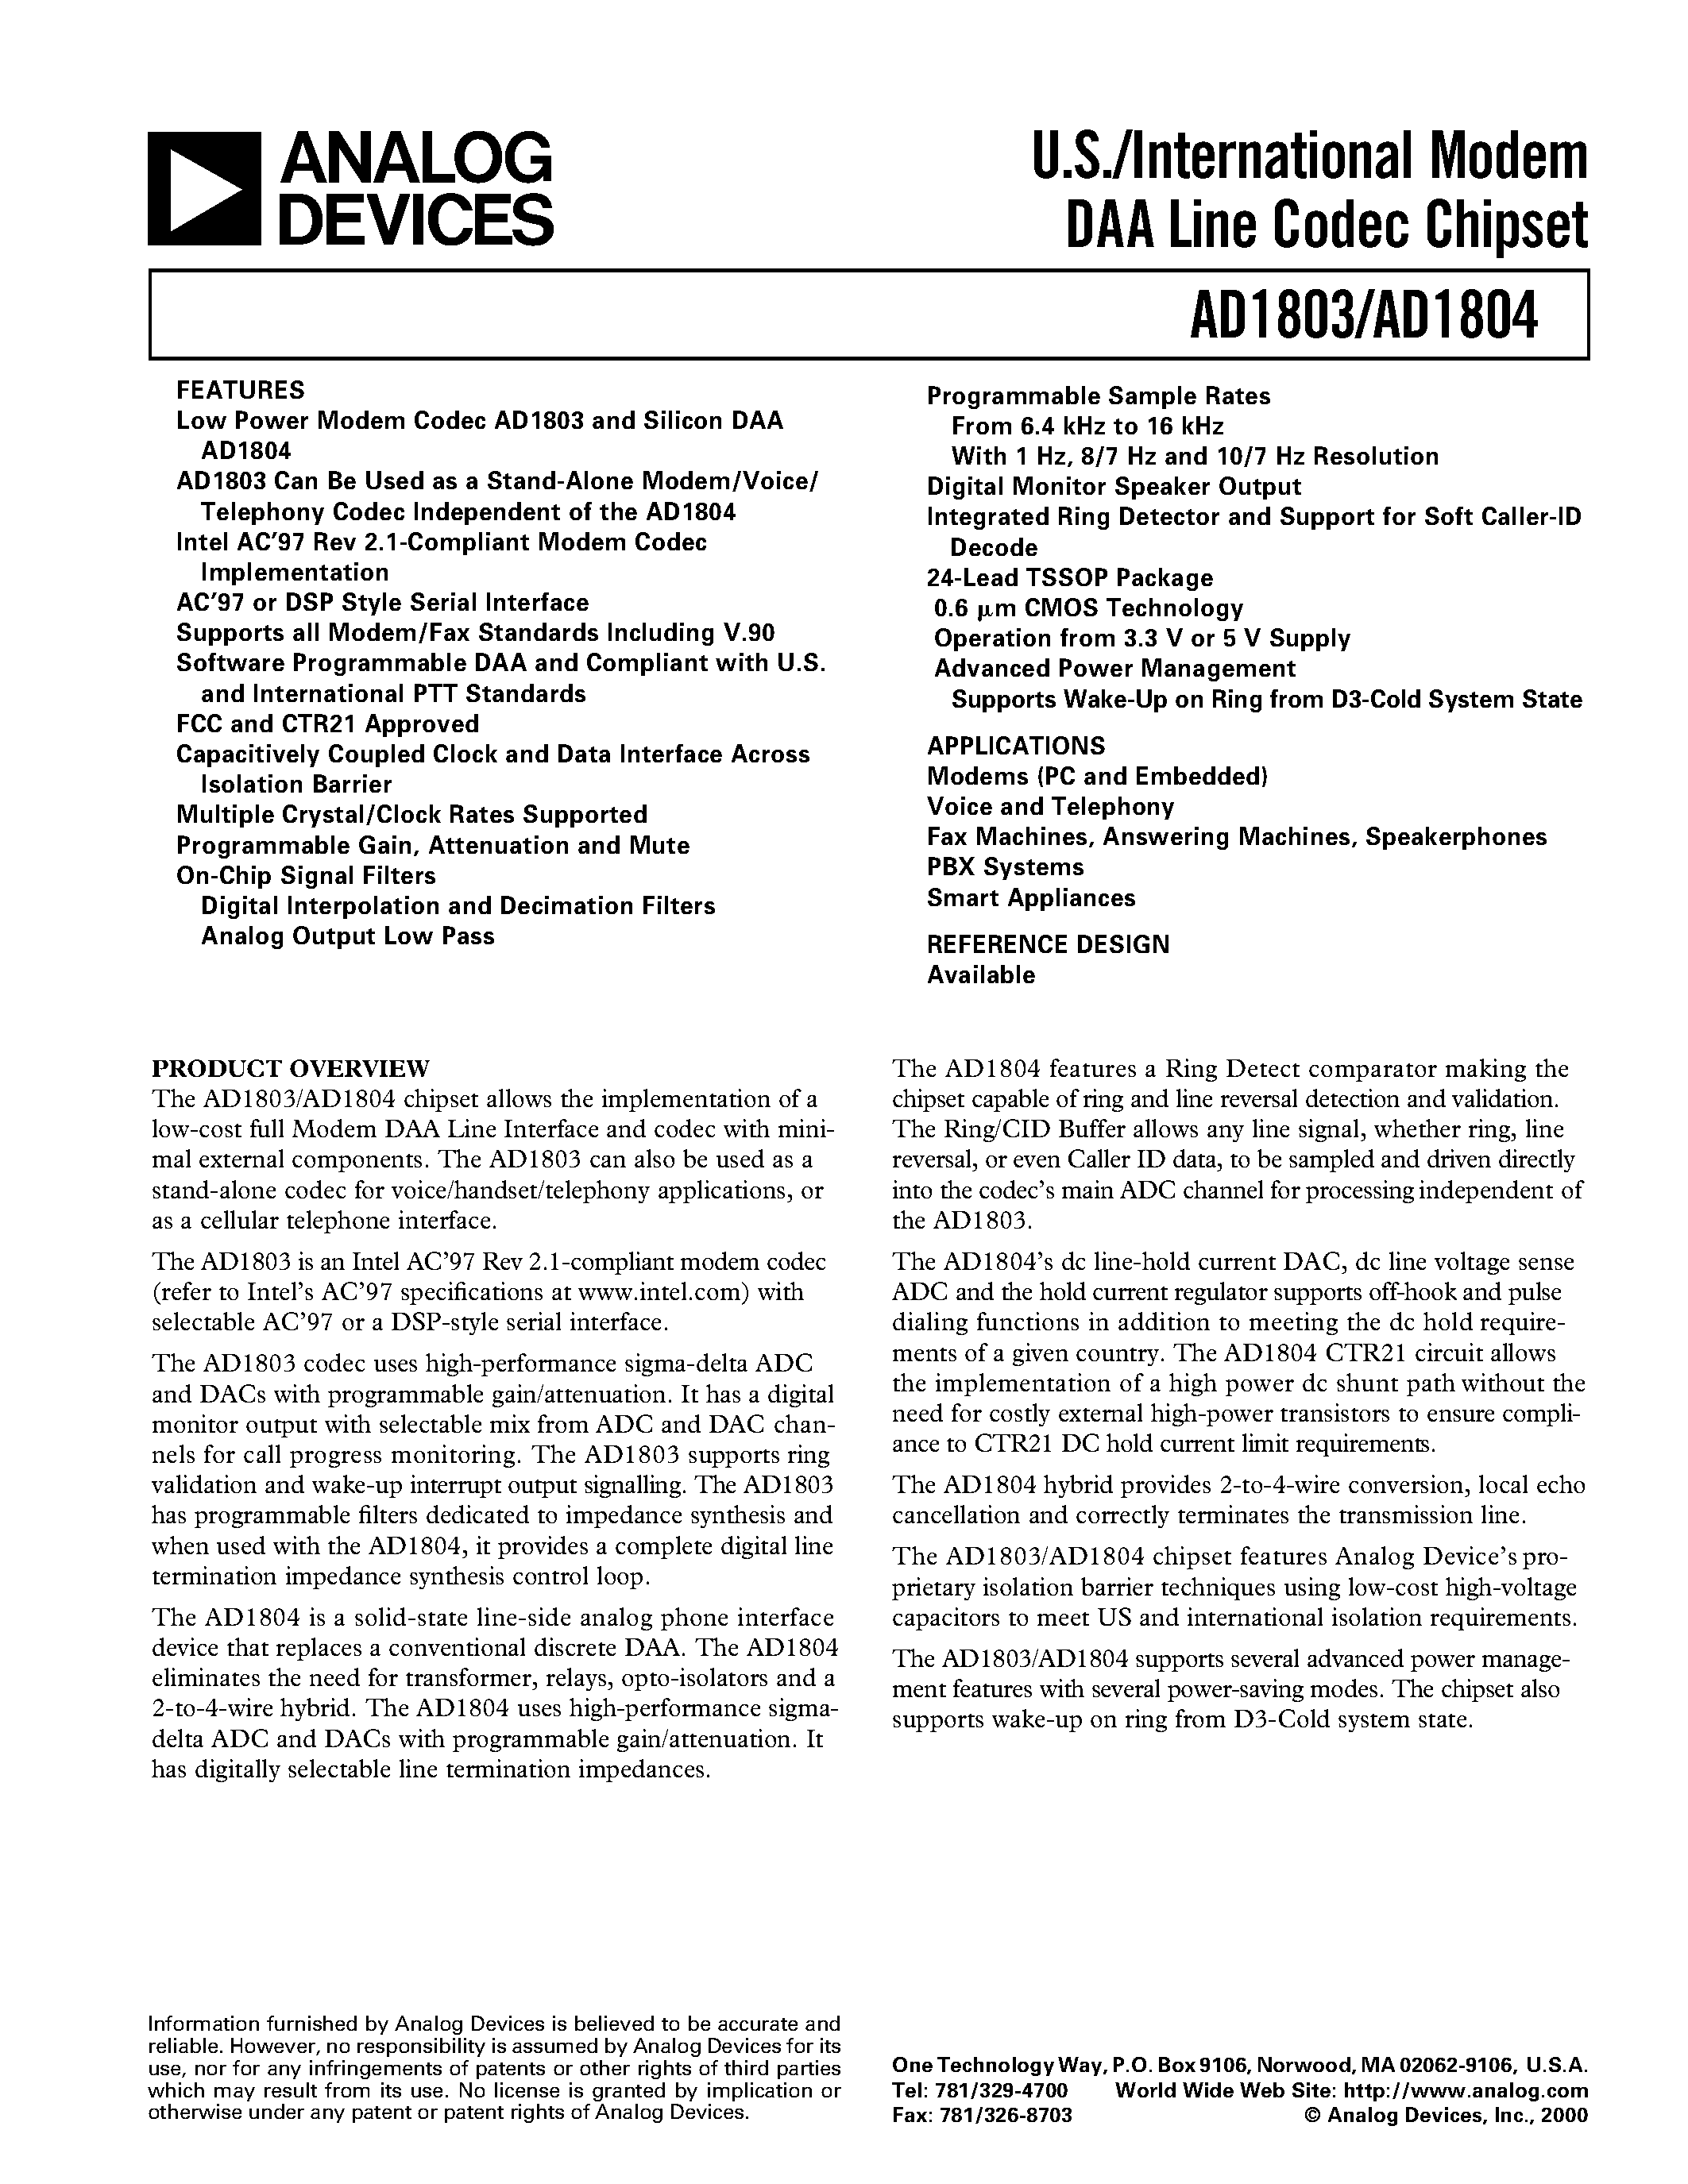 Datasheet AD1804JRU - U.S./International Modem DAA Line Codec Chipset page 1